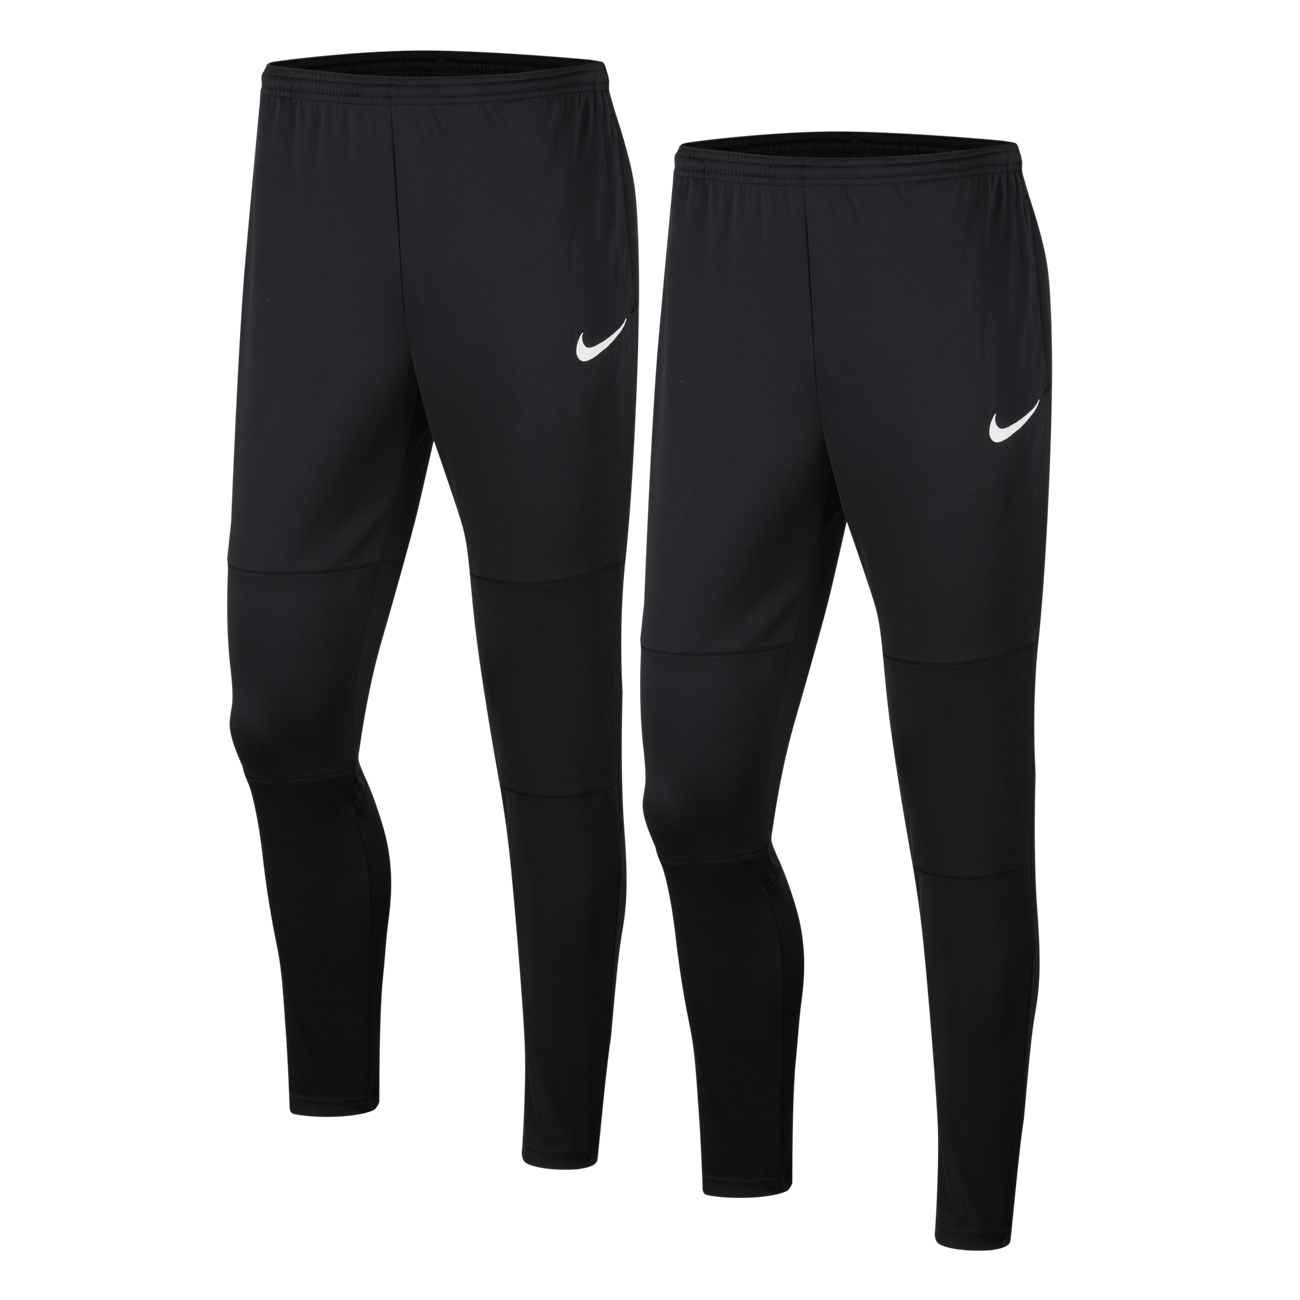 Bild zu Nike Trainingshose Park 20 Knit Pant im Doppelpack für 28,99€ (Vergleich: 35,98€)